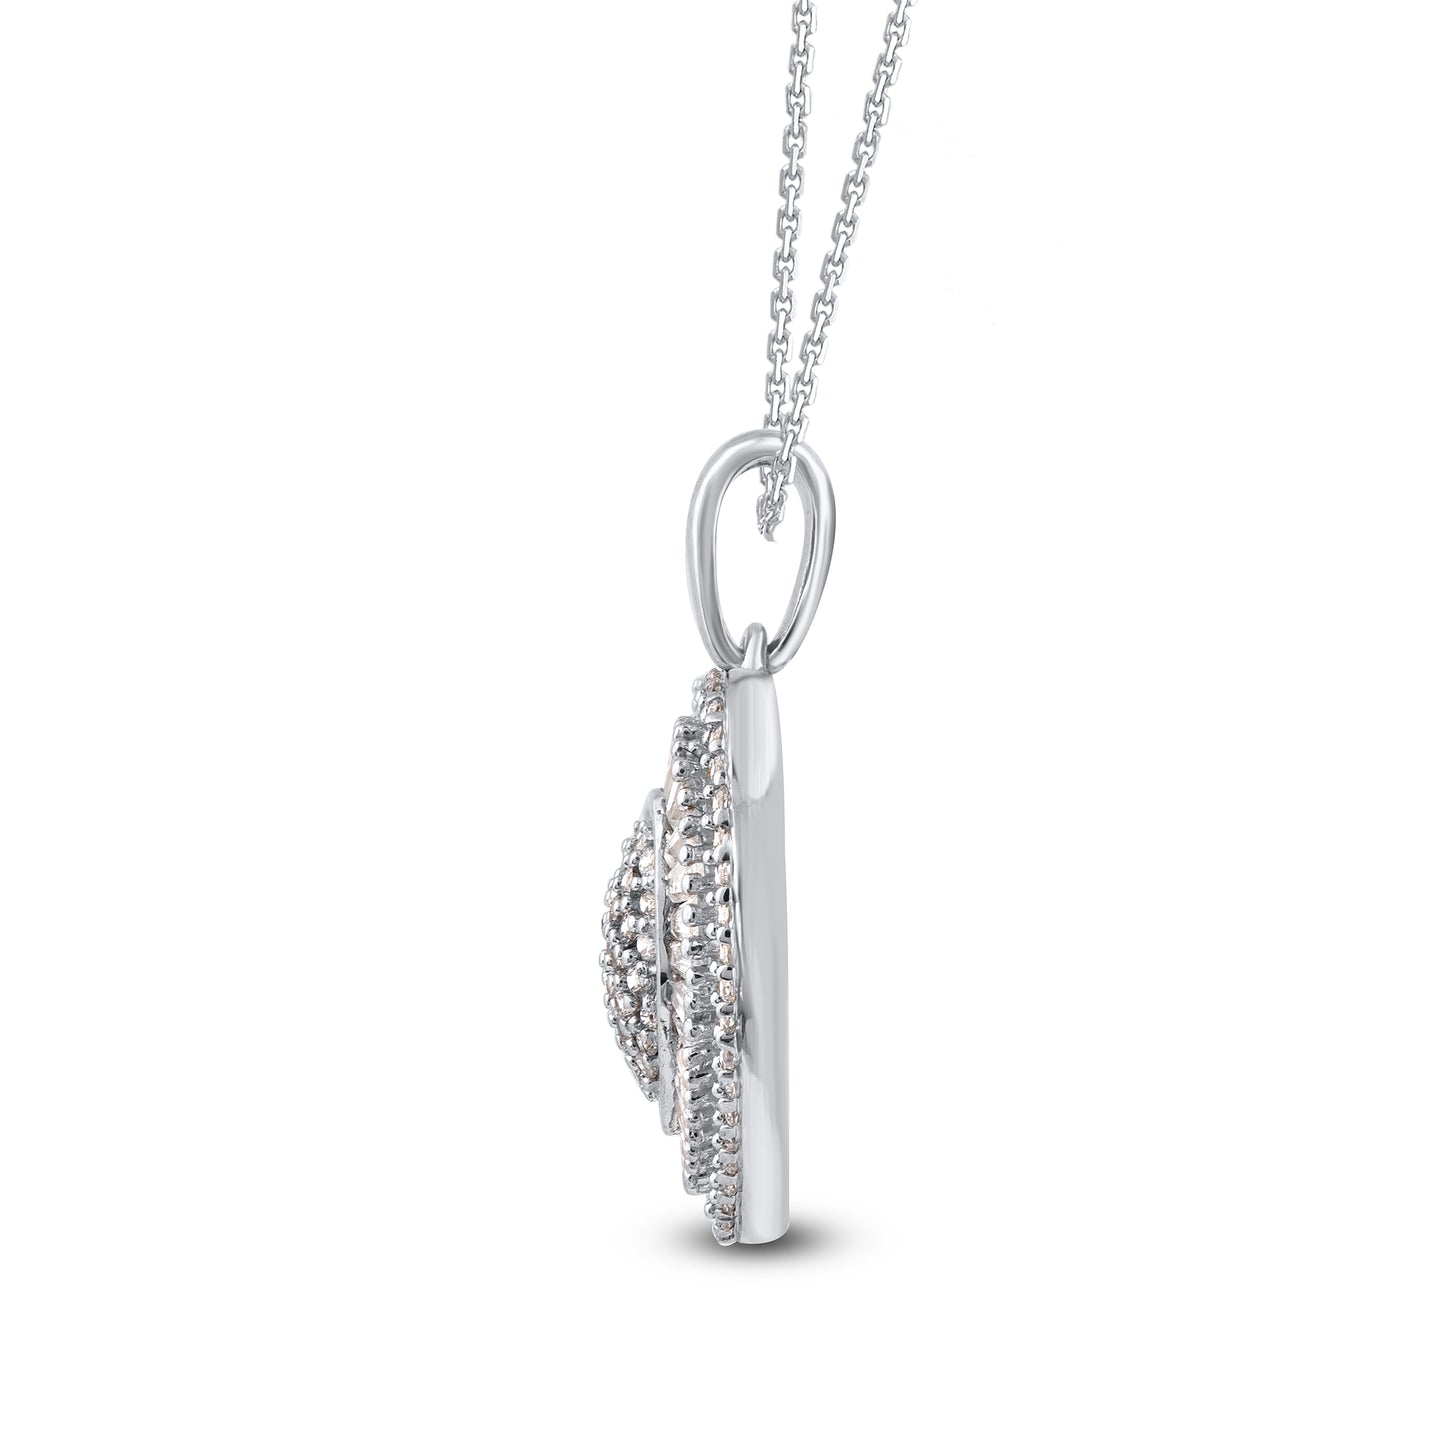 Baguette Sunburst Ballerina Heart Pendant Necklace in 925 Sterling Silver